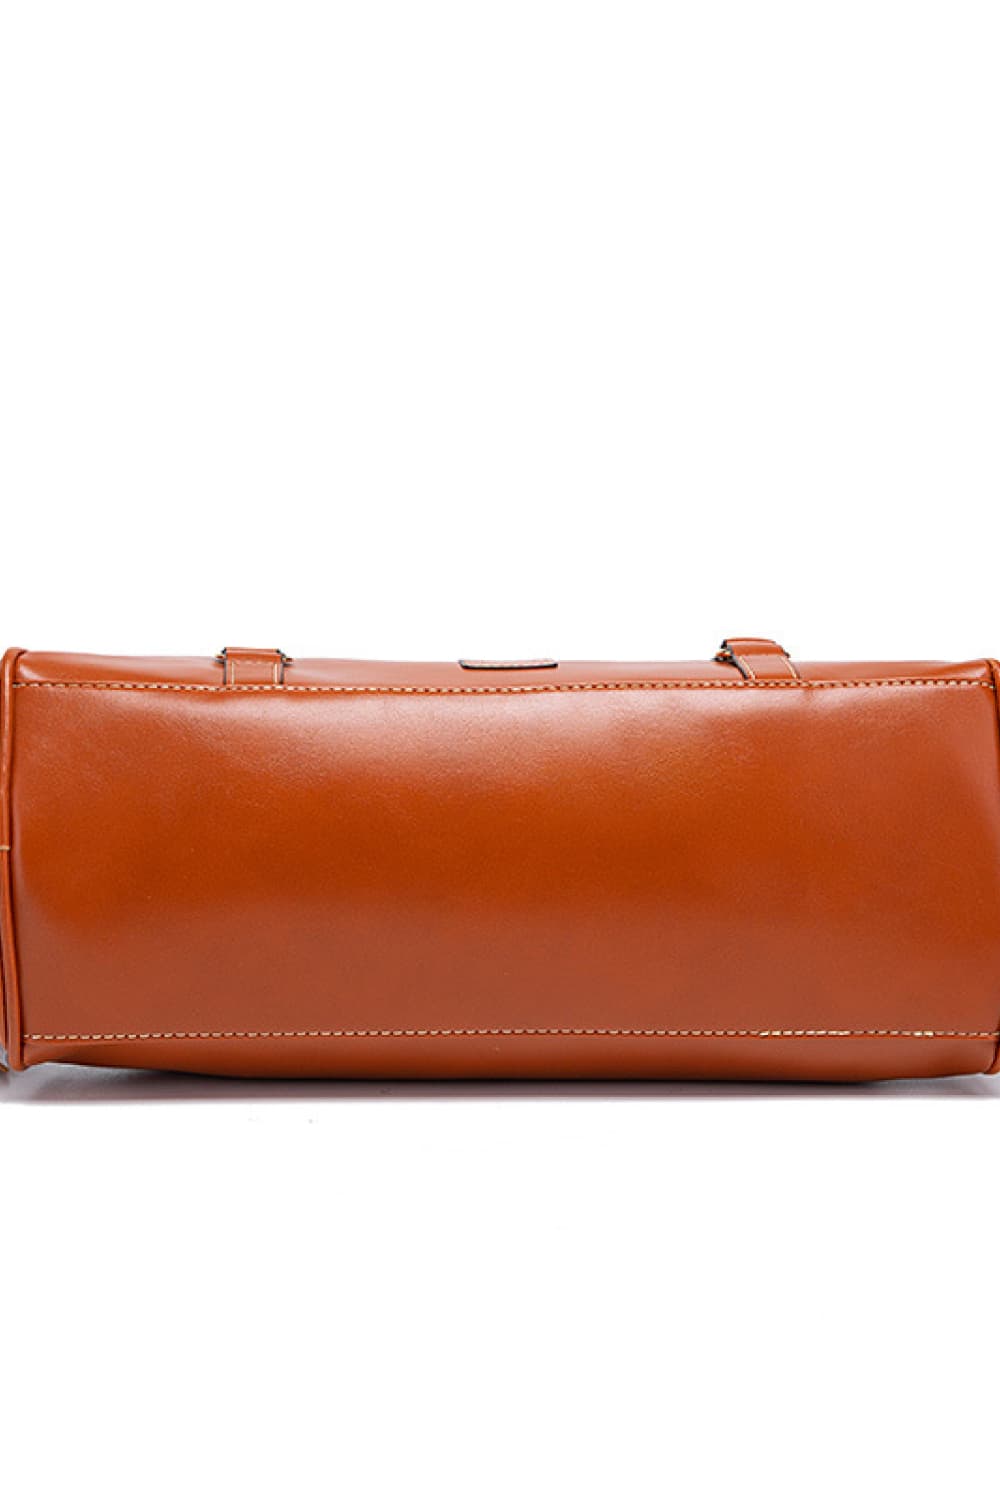 PU Leather Handbag with Tassels - House of Binx 